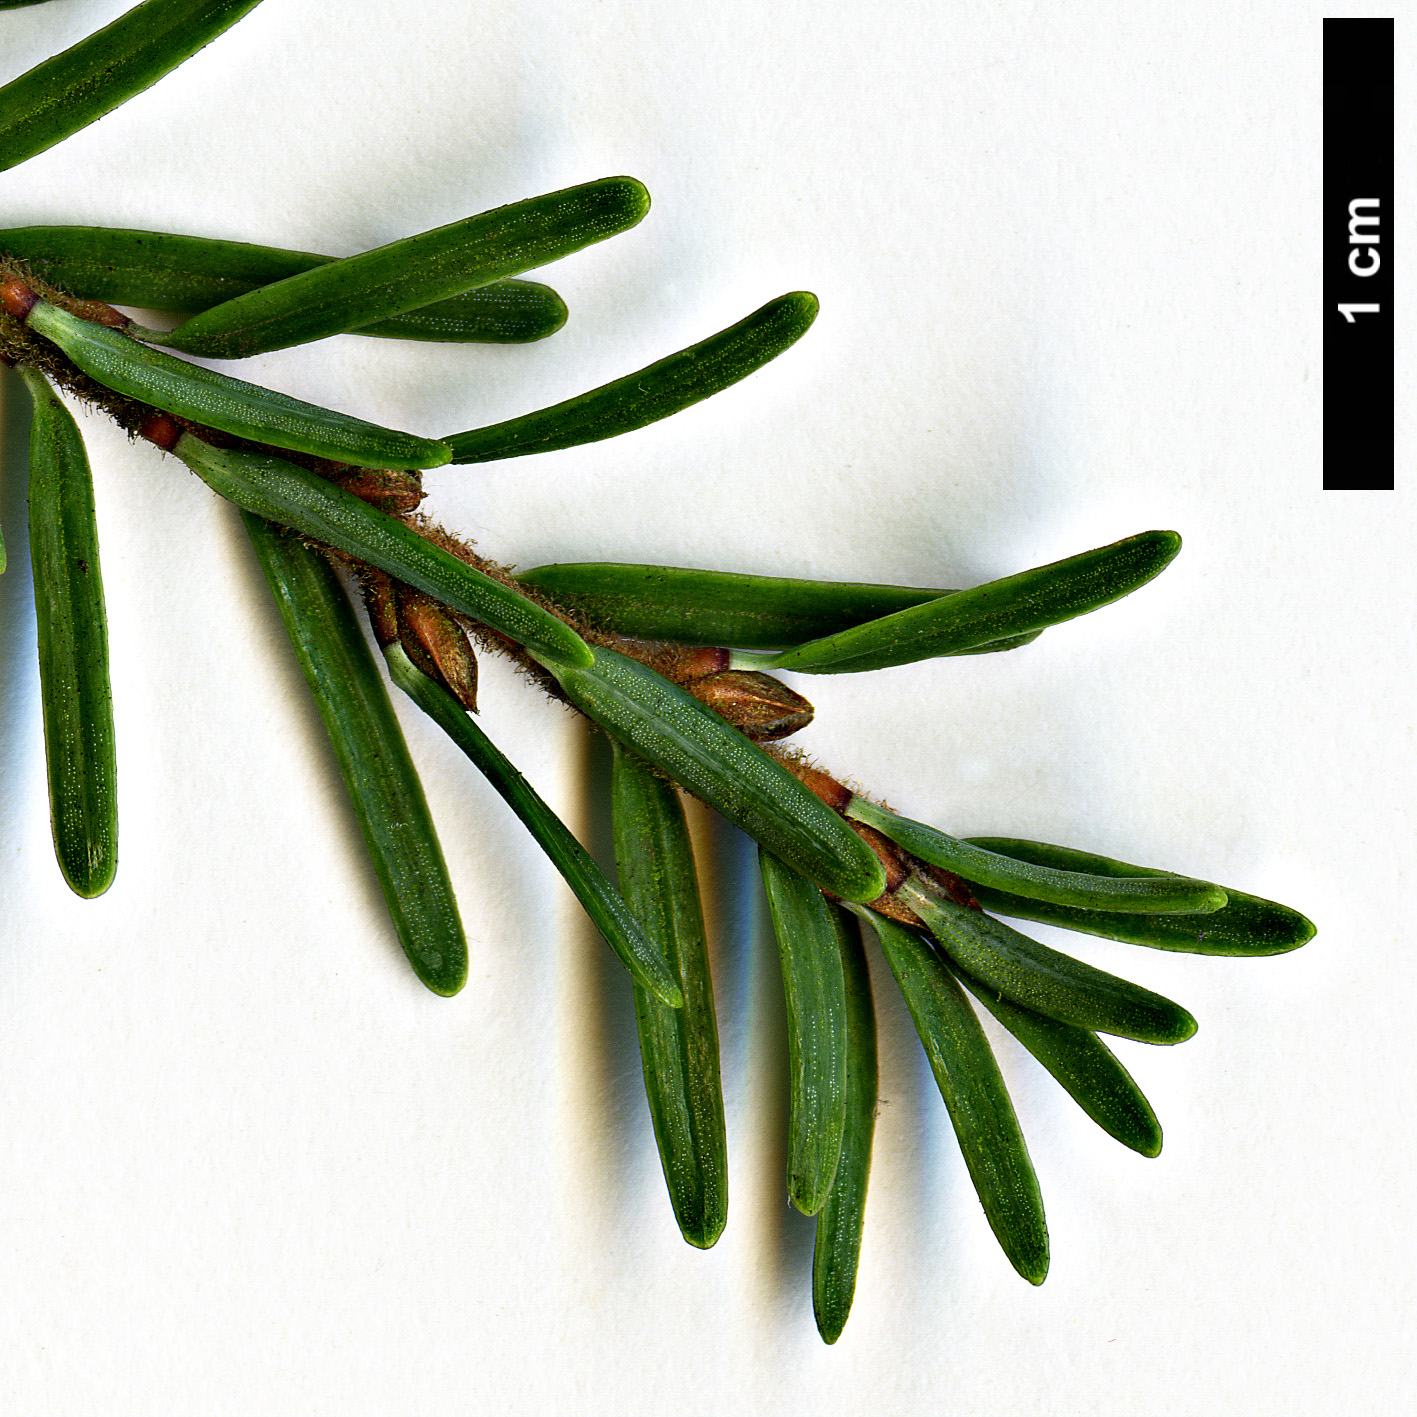 High resolution image: Family: Pinaceae - Genus: Tsuga - Taxon: mertensiana - SpeciesSub: var. jeffreyi